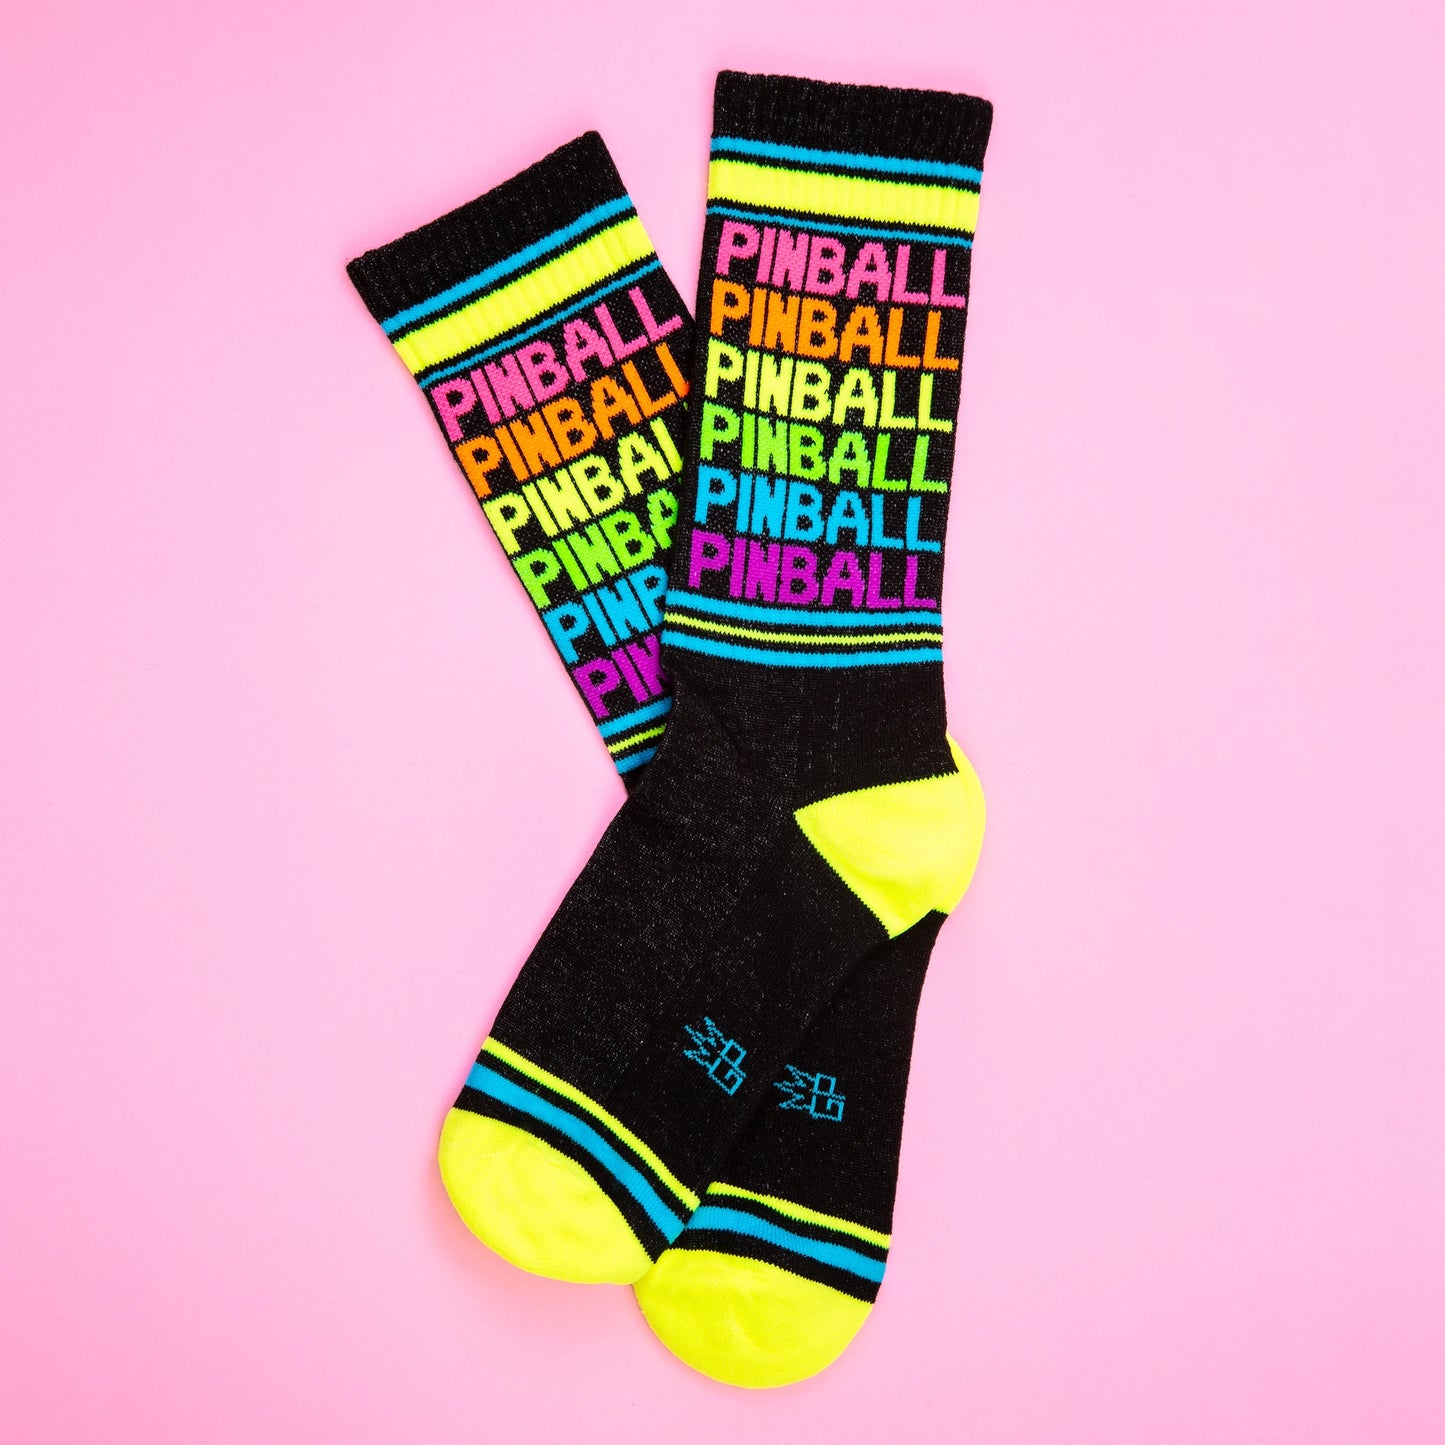 Gumball Poodle - Pinball - Neon Rainbow Gym Crew Socks